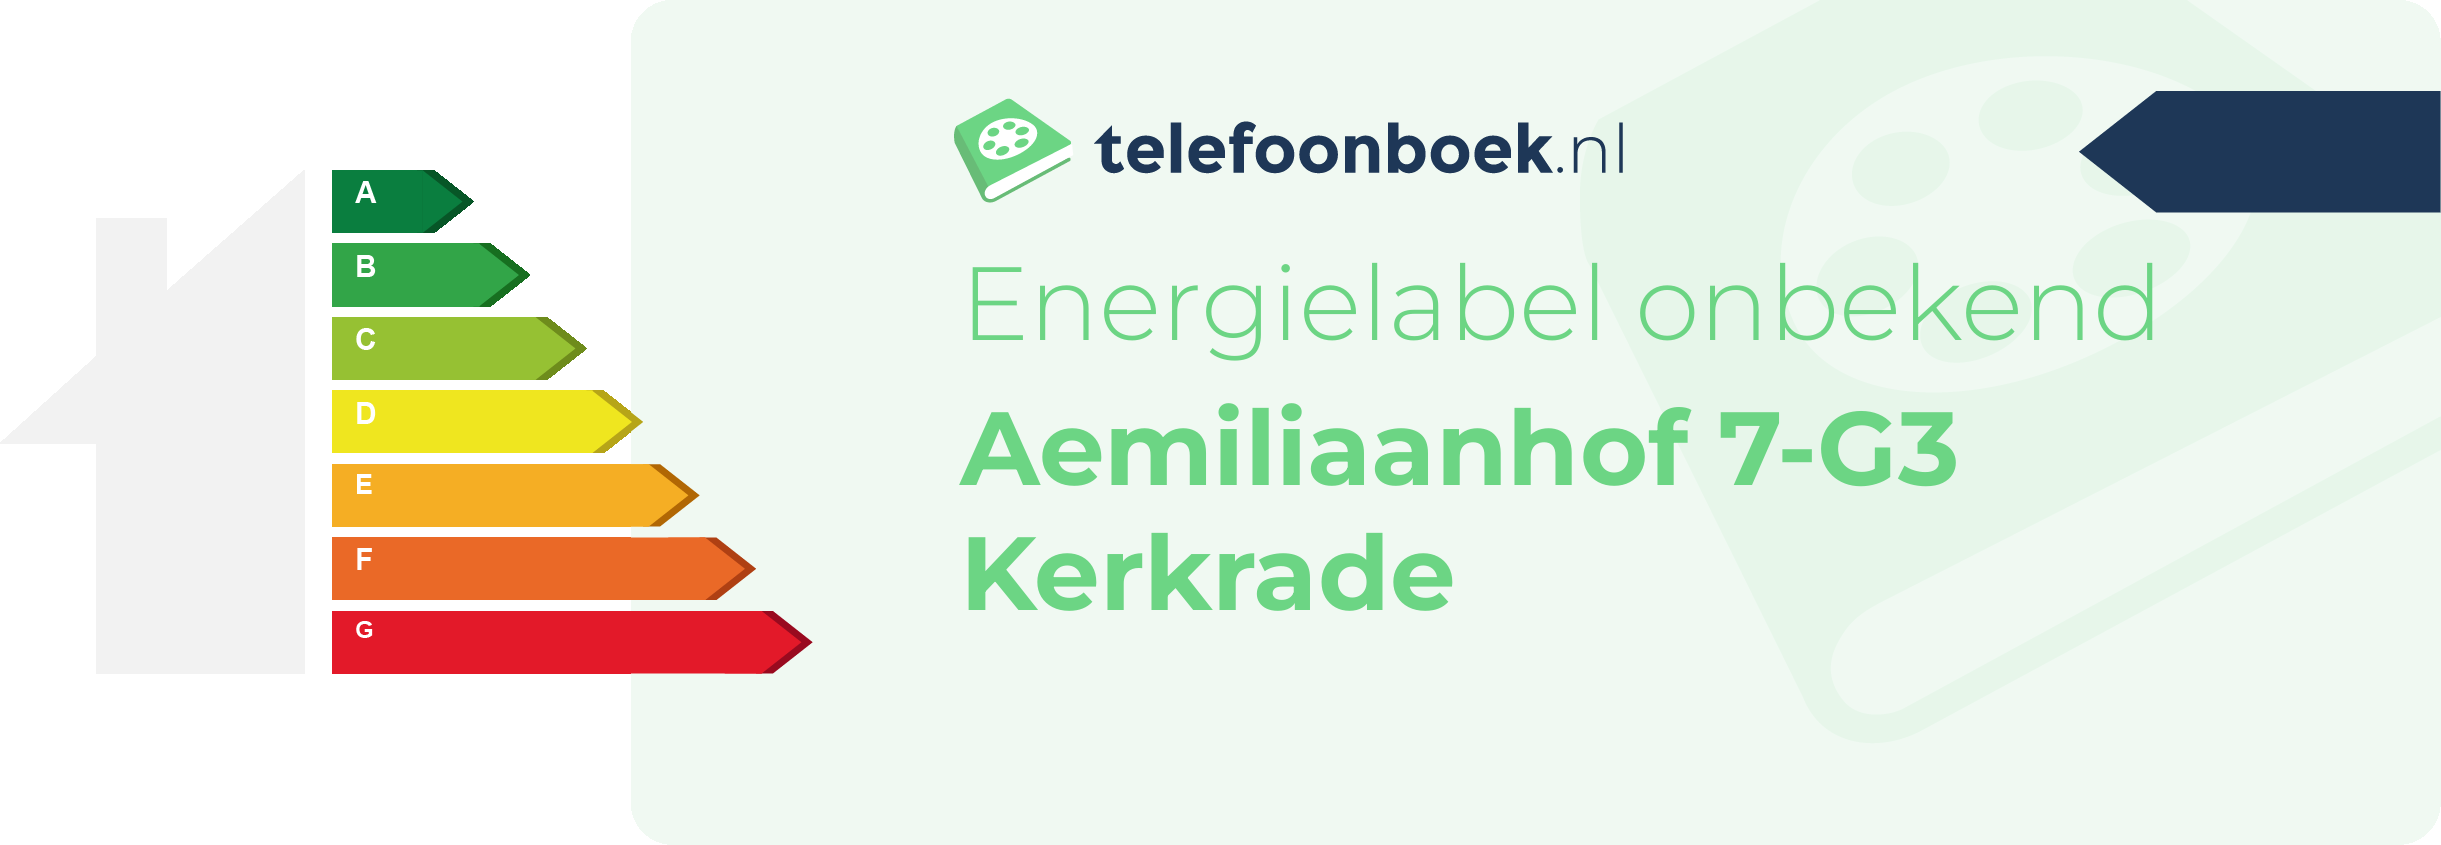 Energielabel Aemiliaanhof 7-G3 Kerkrade